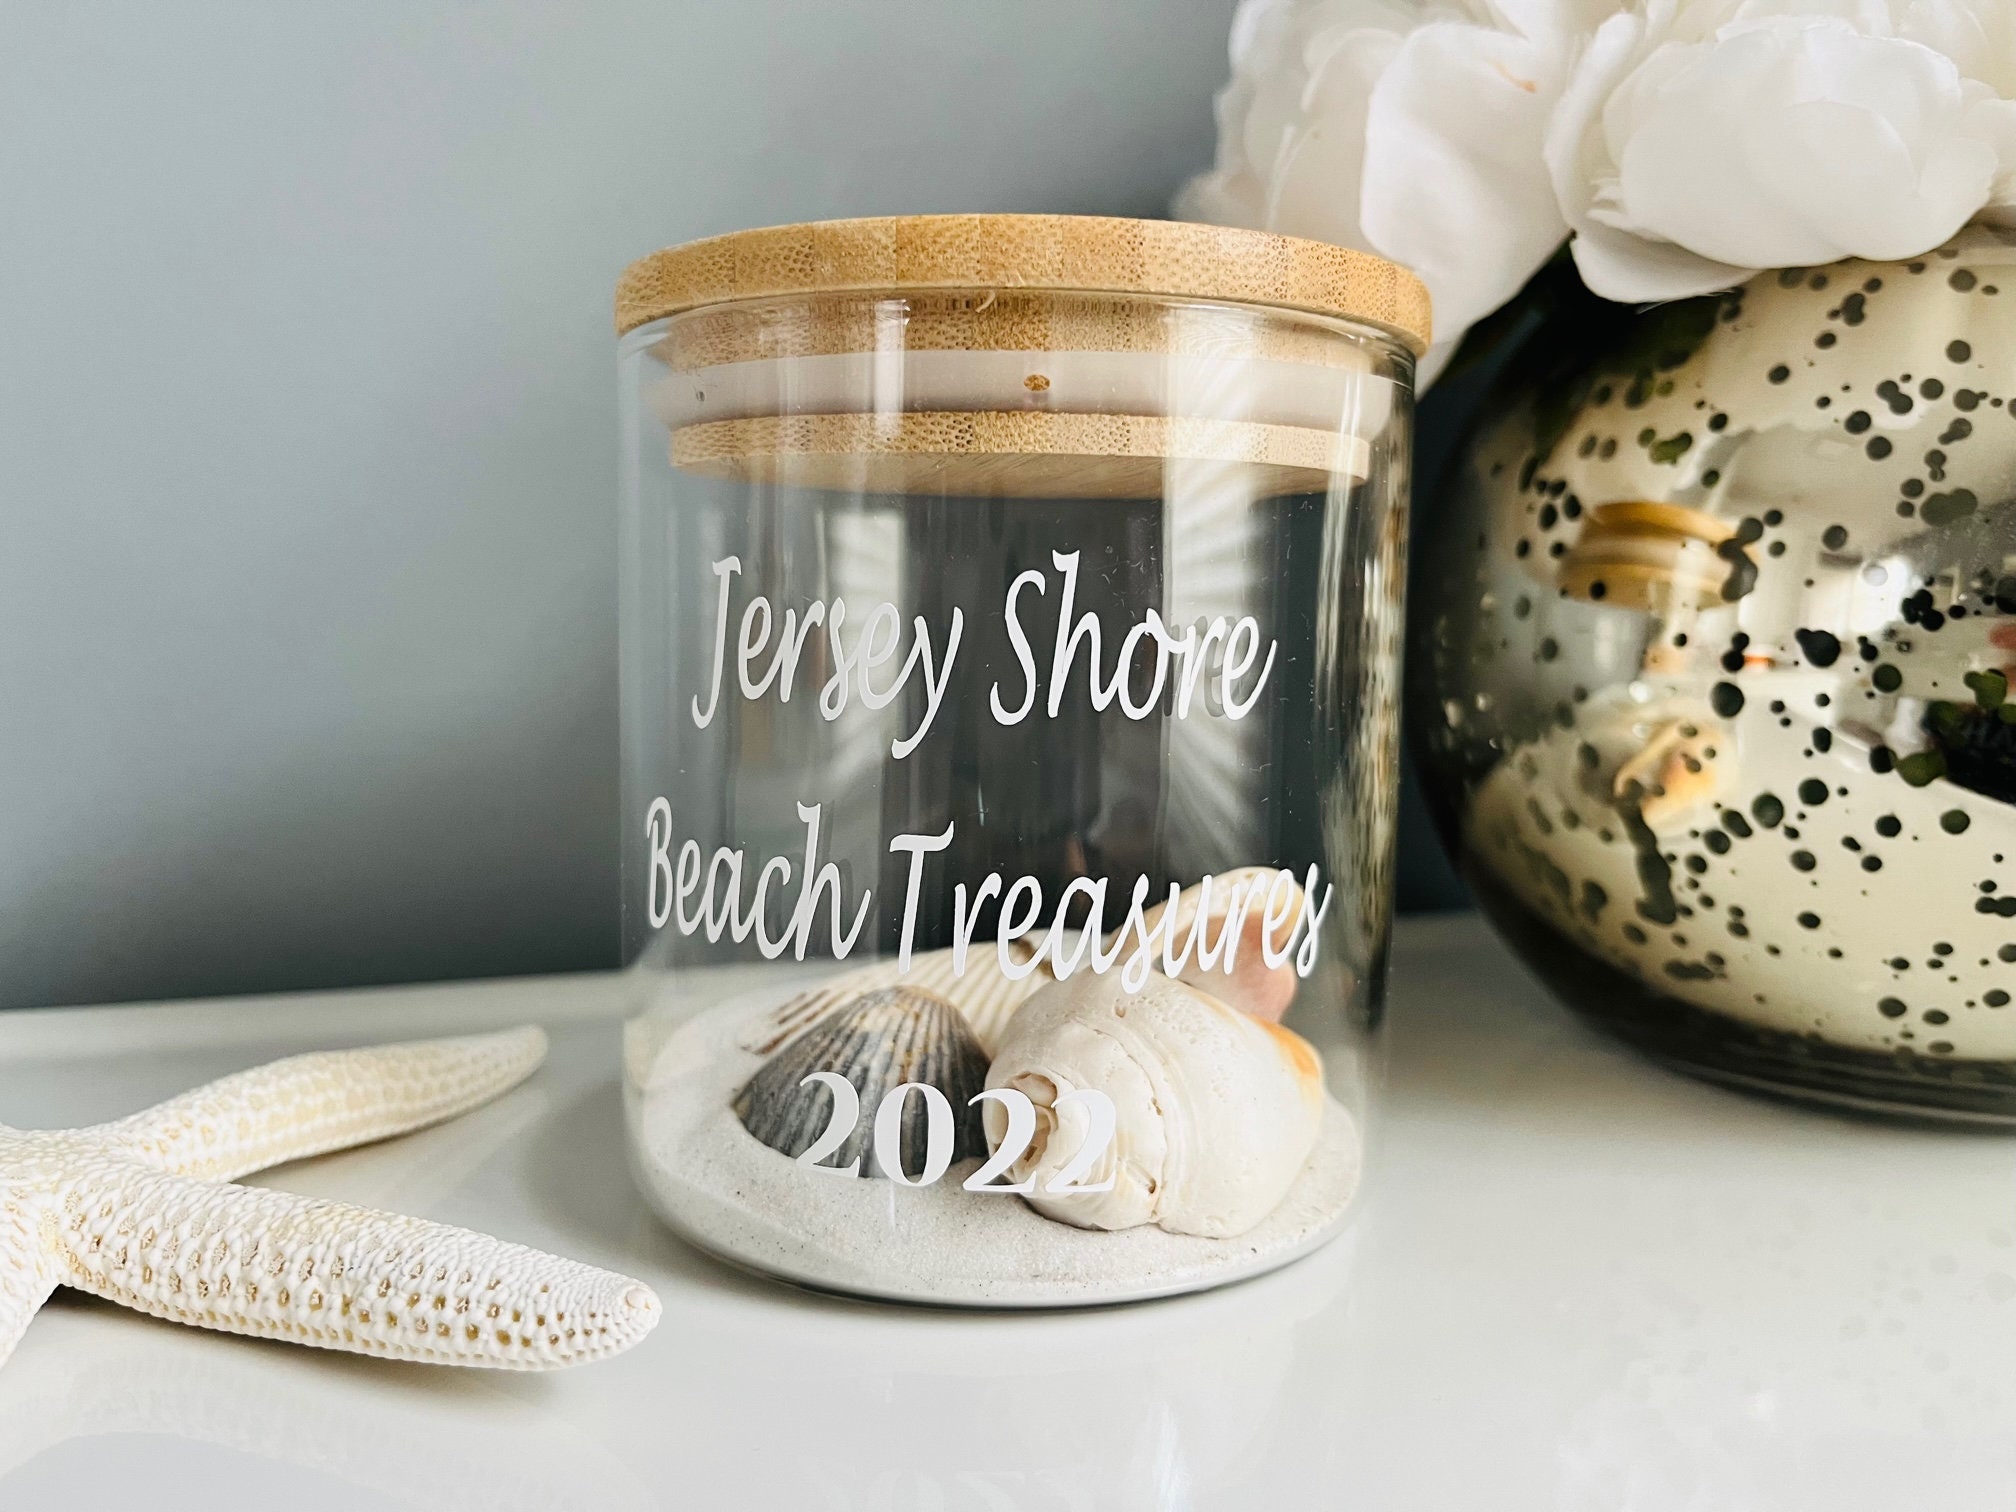 Large Glass Beach Jars, Decorative Beach Glass Jars, Beach, Sand, Table  Decor, Beach Decor, Decorative Jars, Gifts, Water, Seashell Gifts